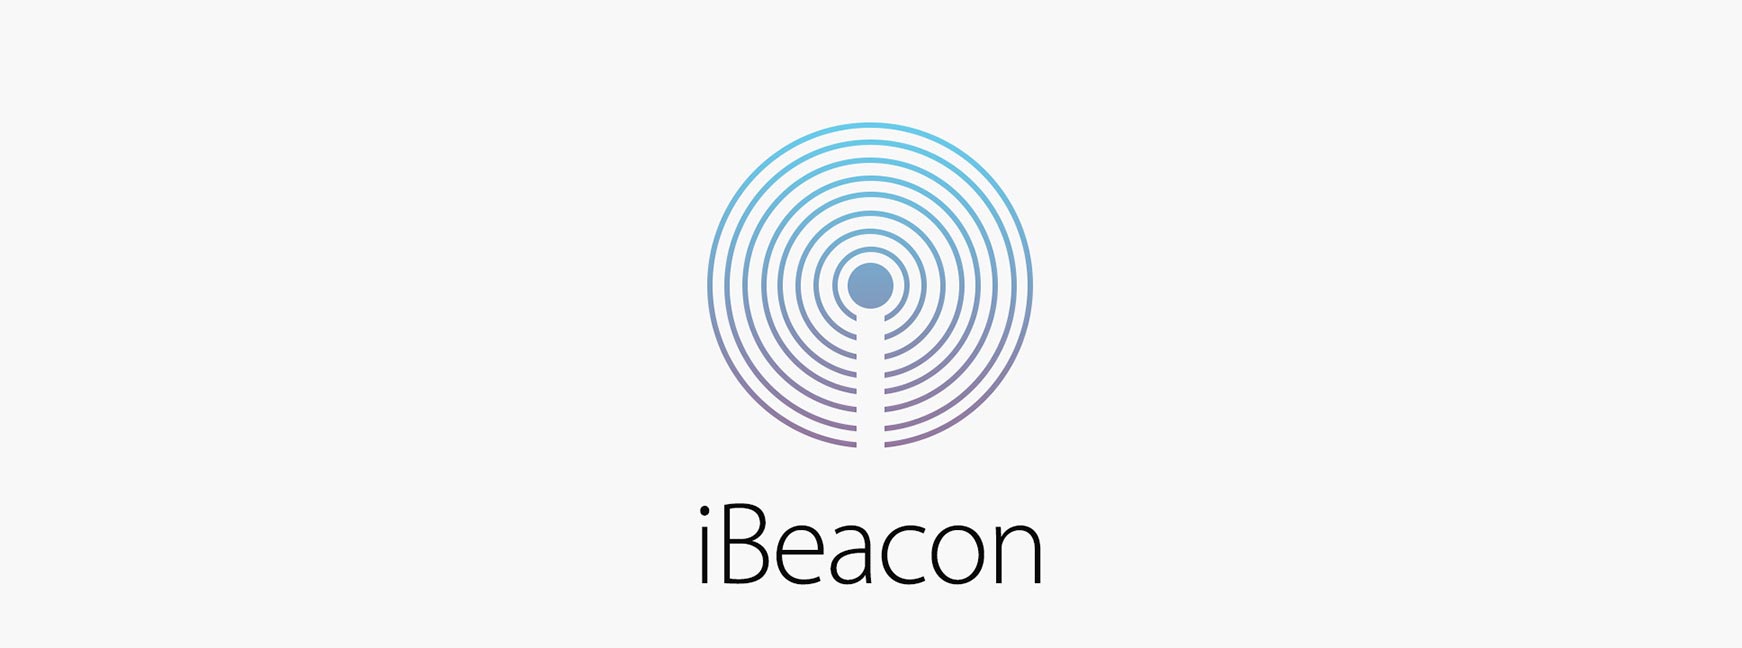 iBeacon iBeacon iBeacon